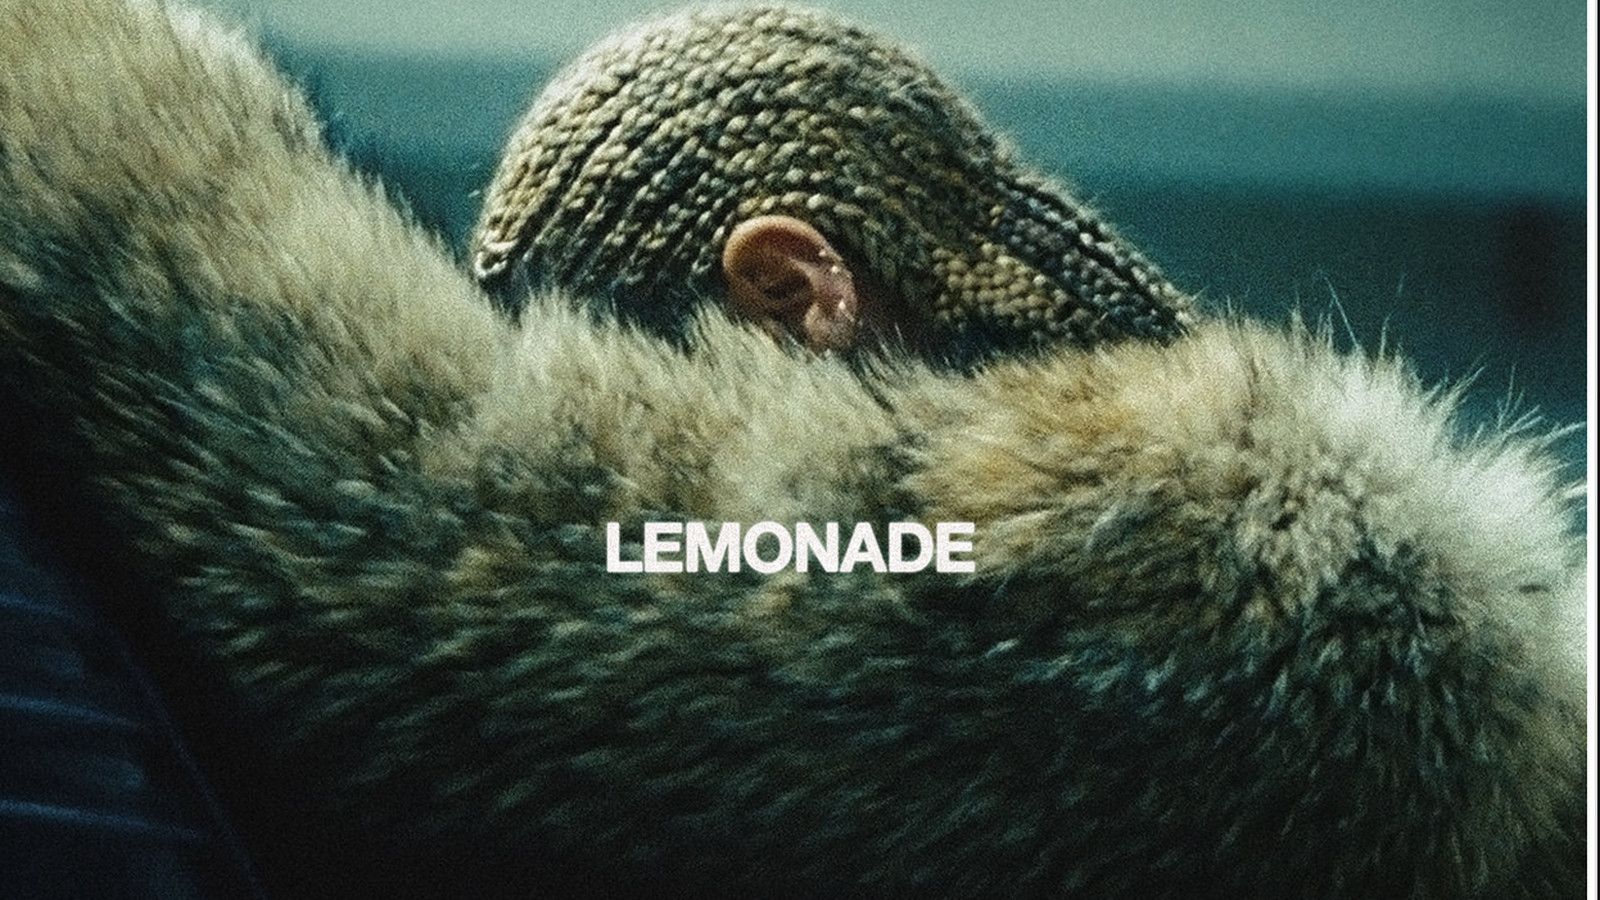 Beyoncé's new album Lemonade is now available on Tidal